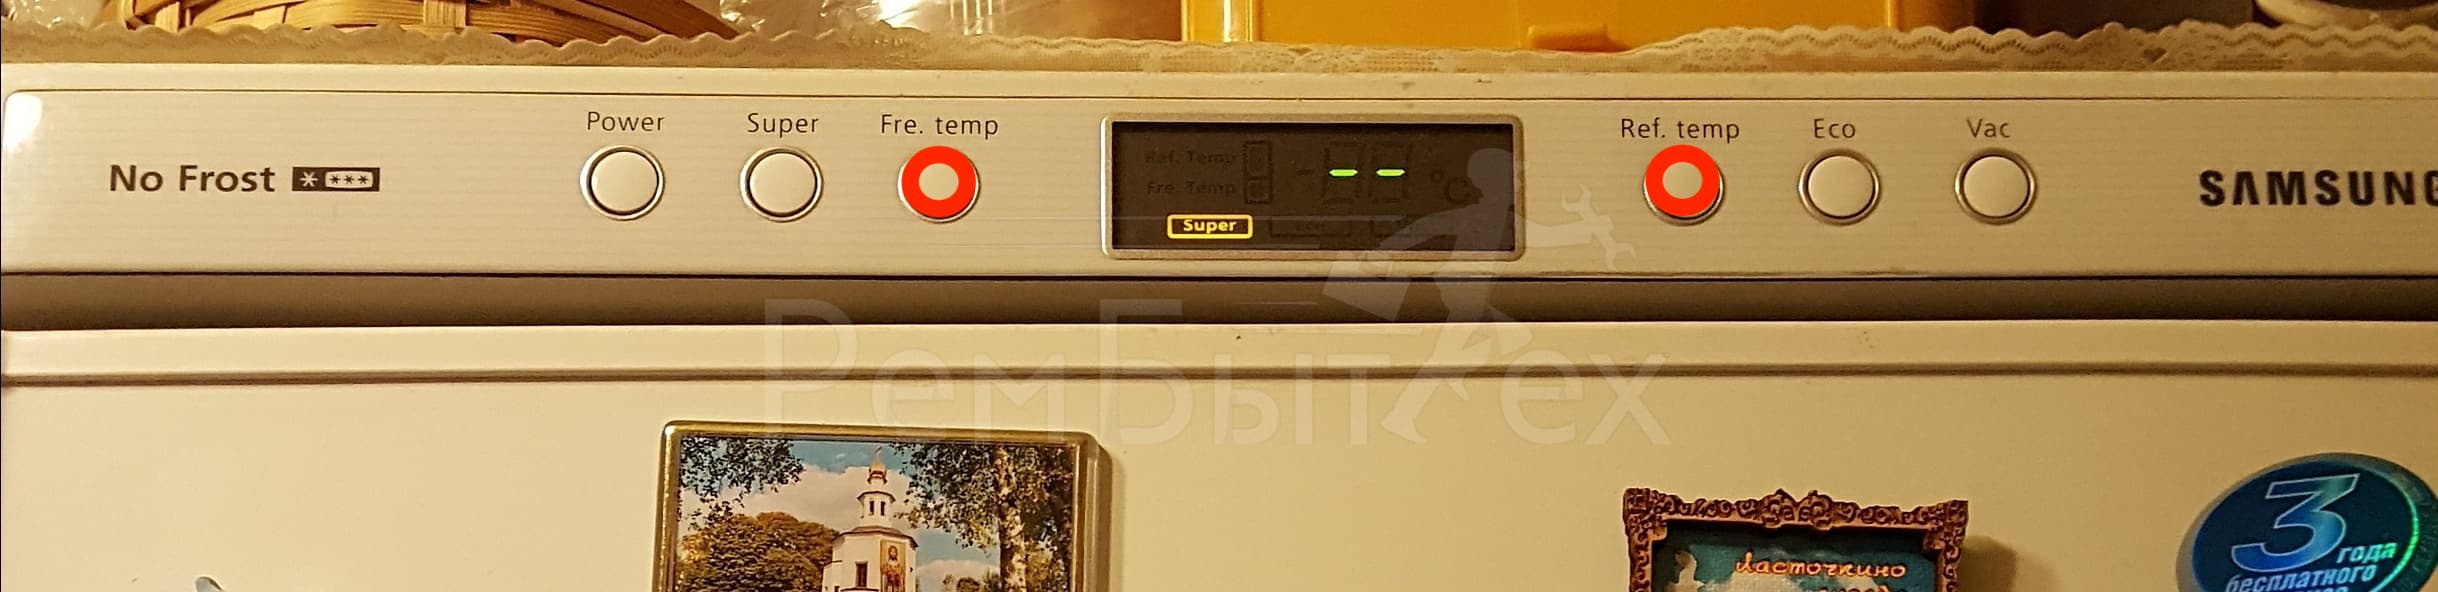 Коды ошибок холодильника Samsung RS25H модели side-by-side